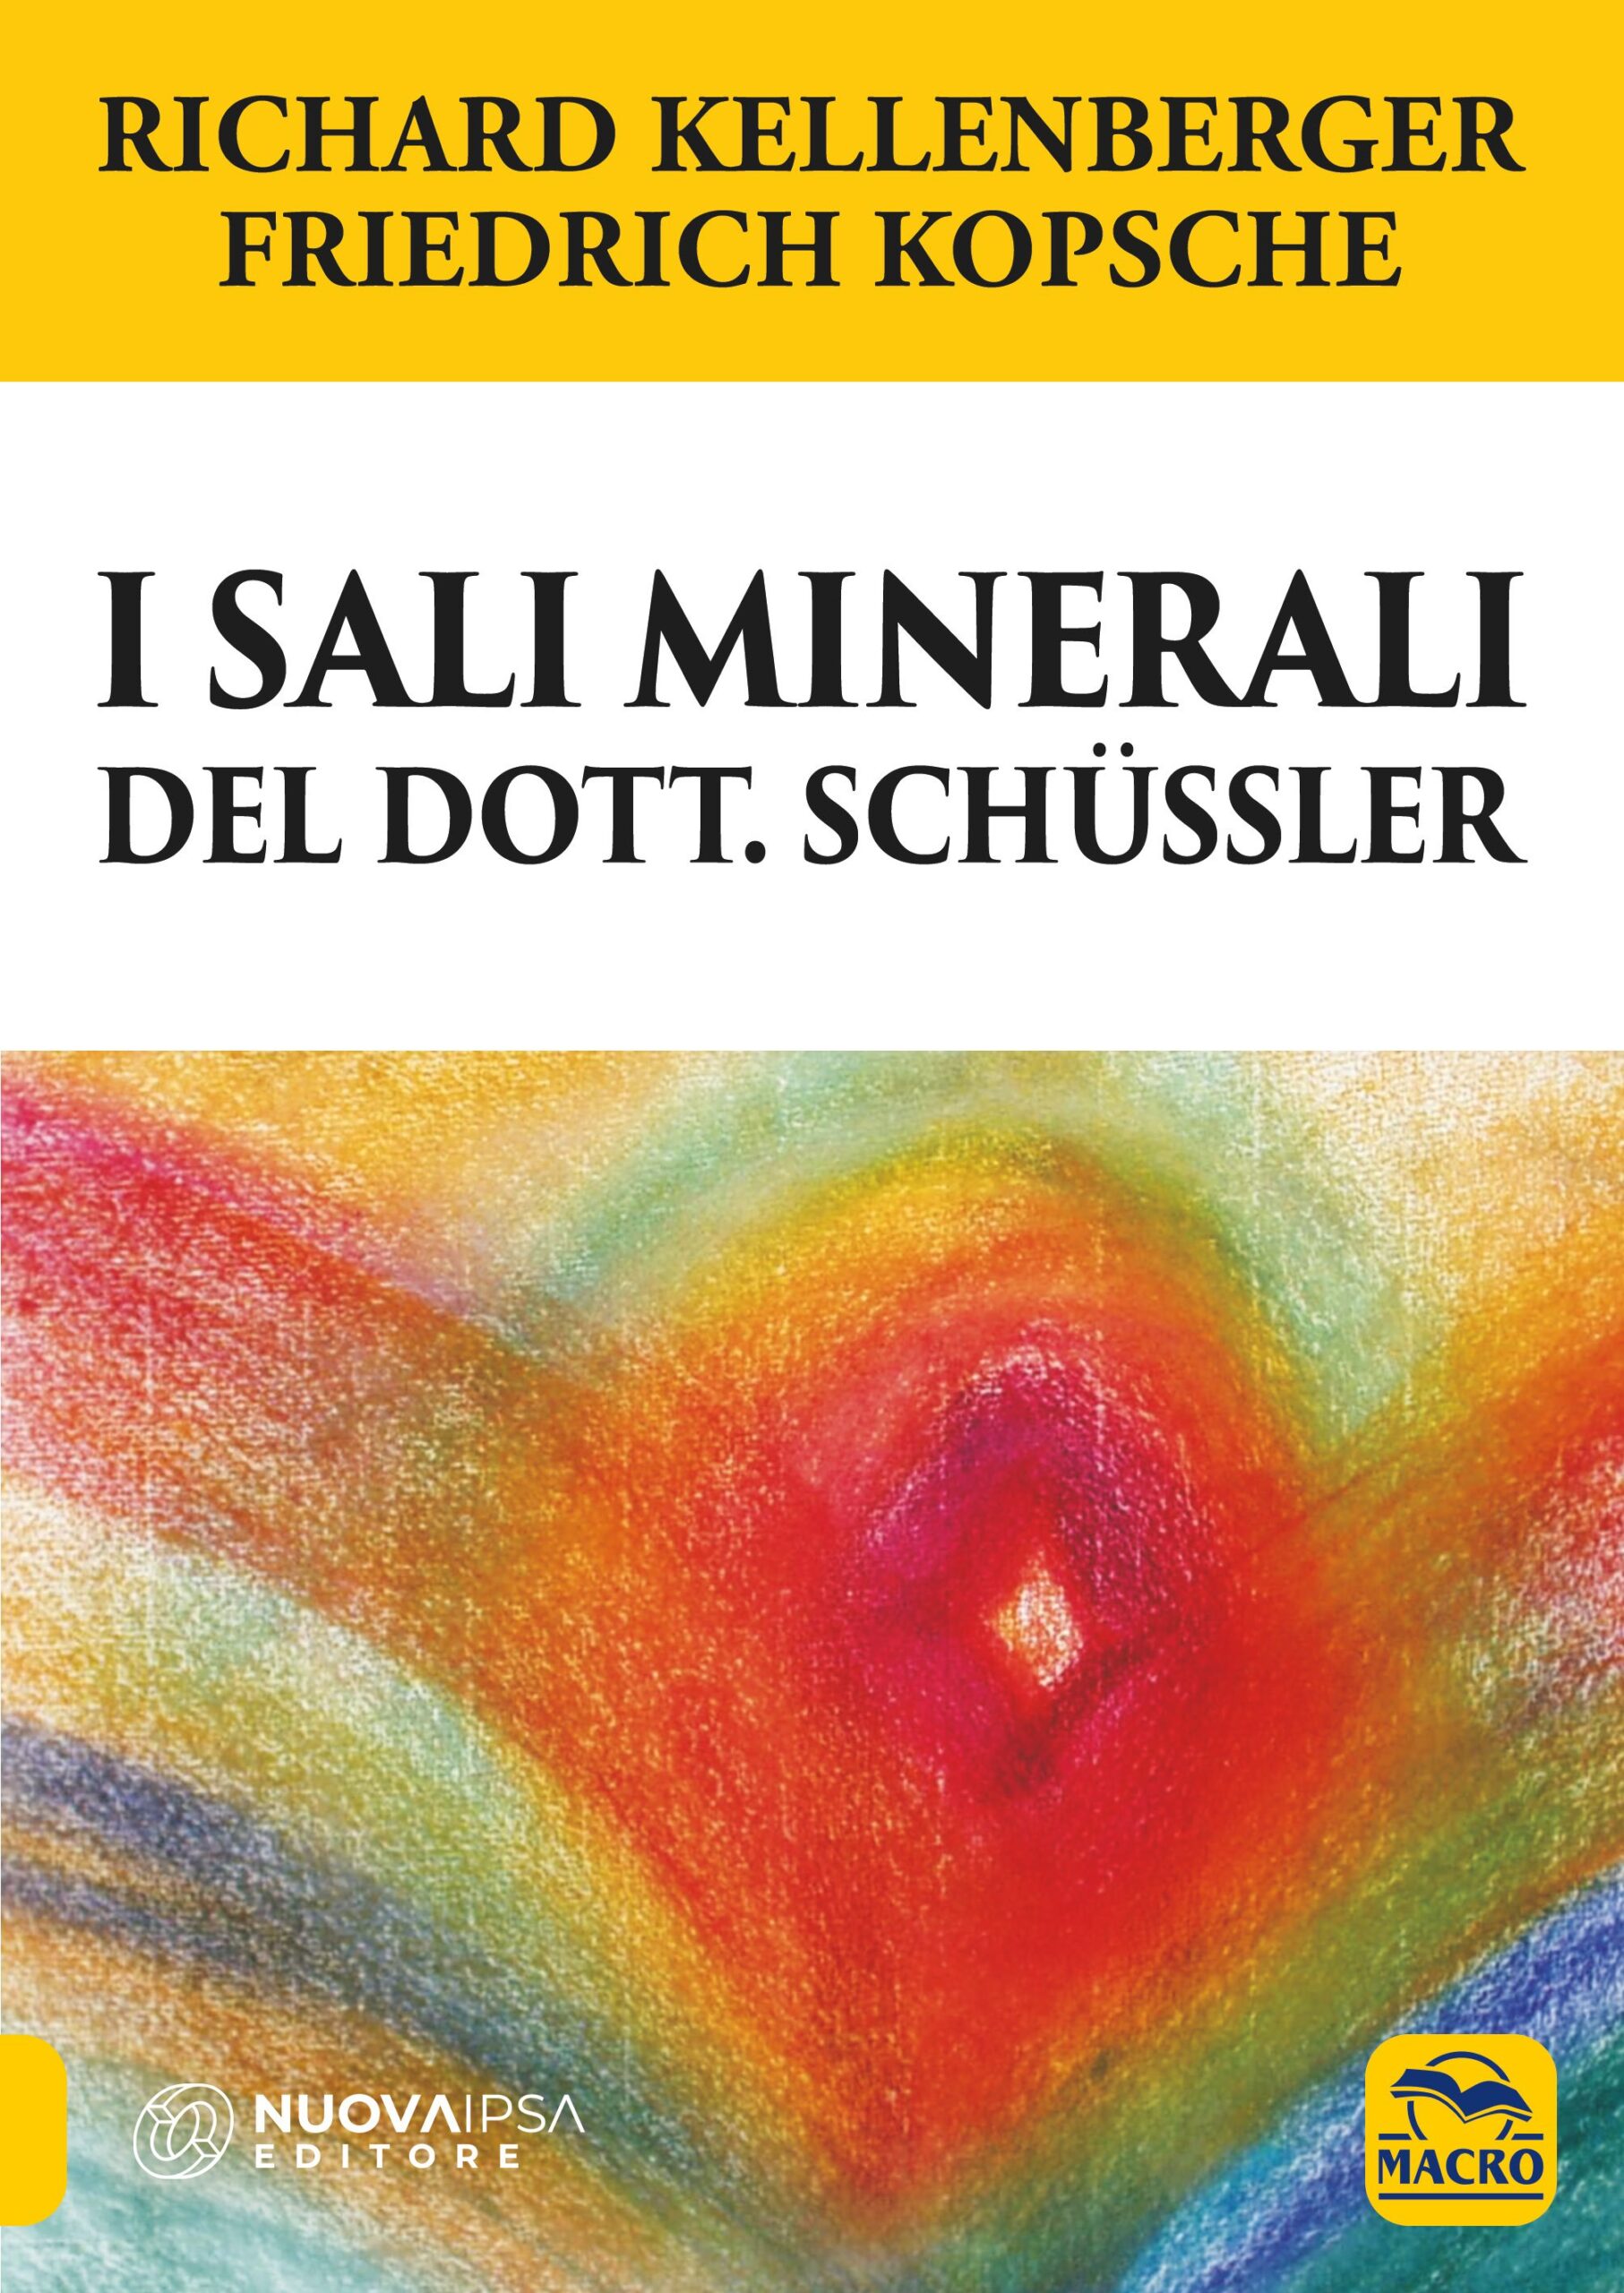 sali-minerali-del-dott-schussler-14455